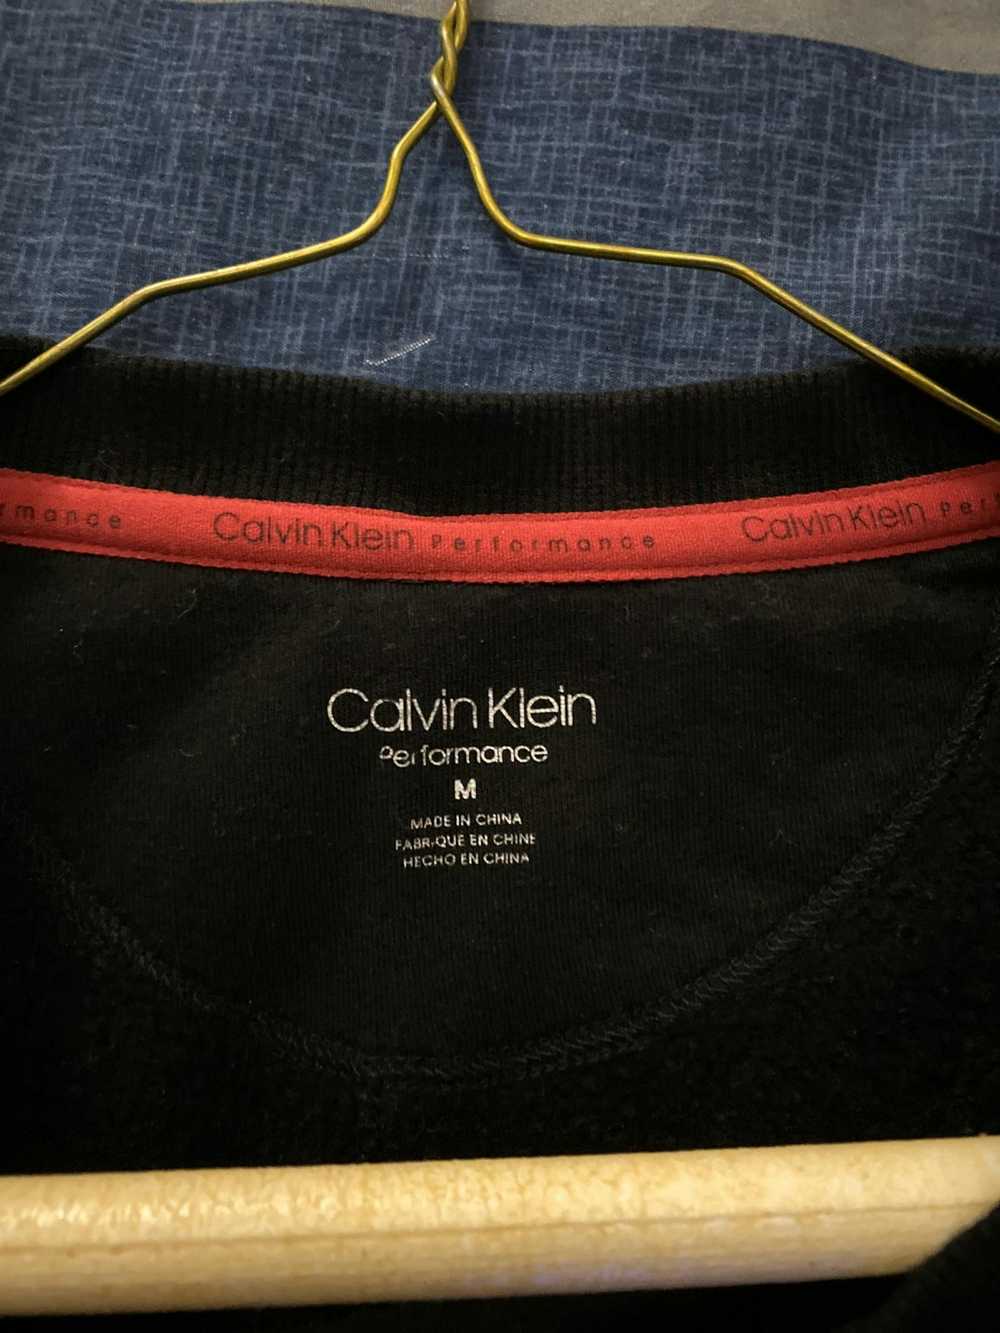 Calvin Klein Calvin Klein performance sweater - image 3